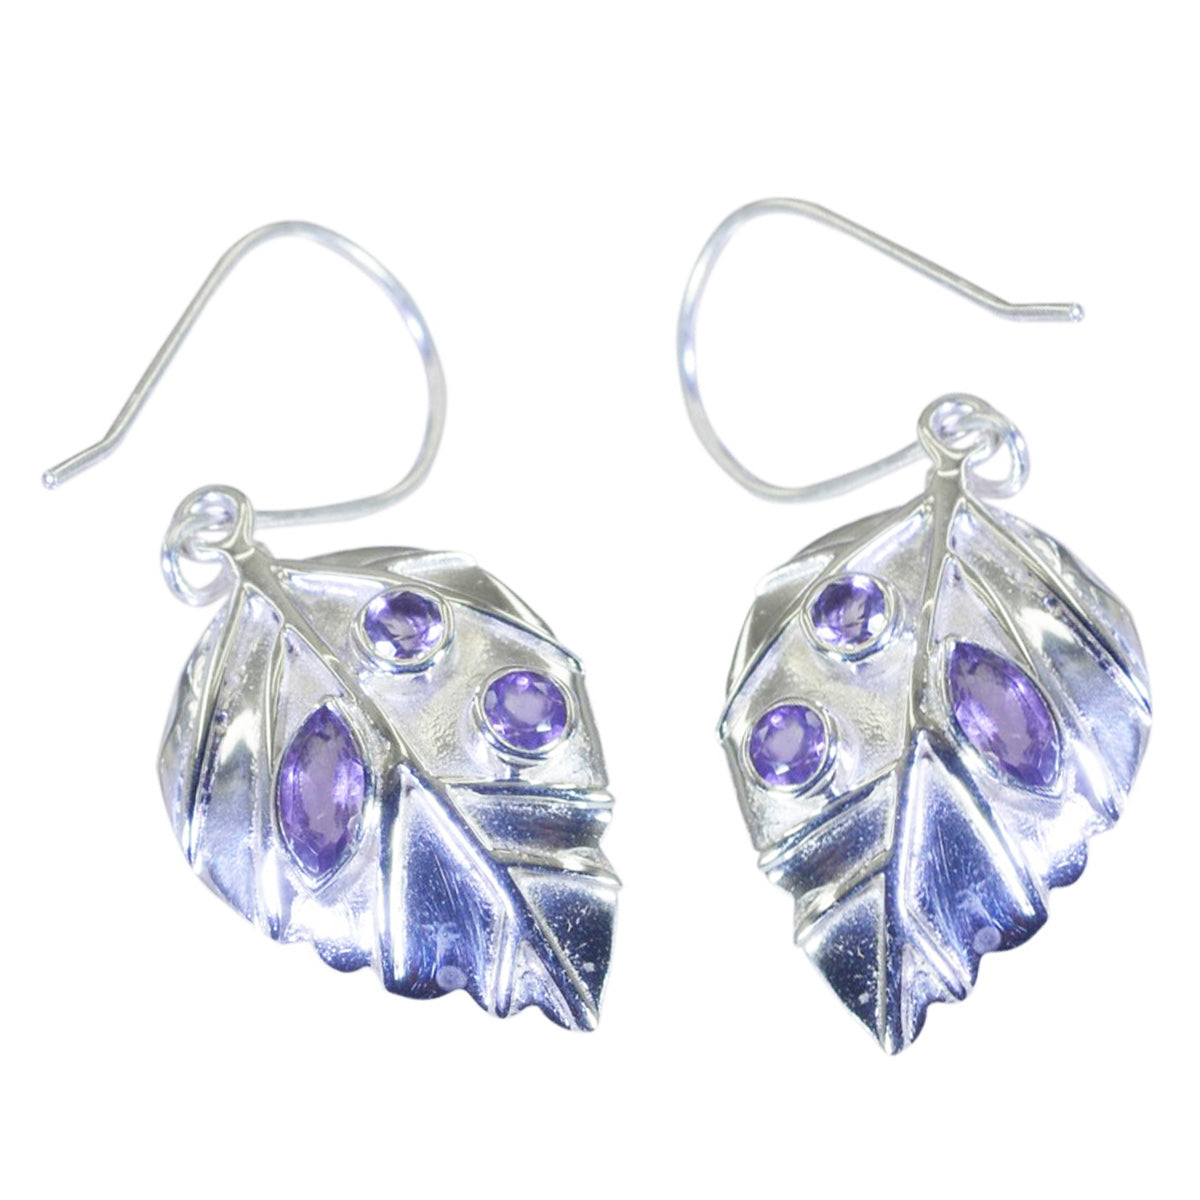 Riyo Real Gemstones multi shape Faceted Purple Amethyst Silver Earrings gift for friends